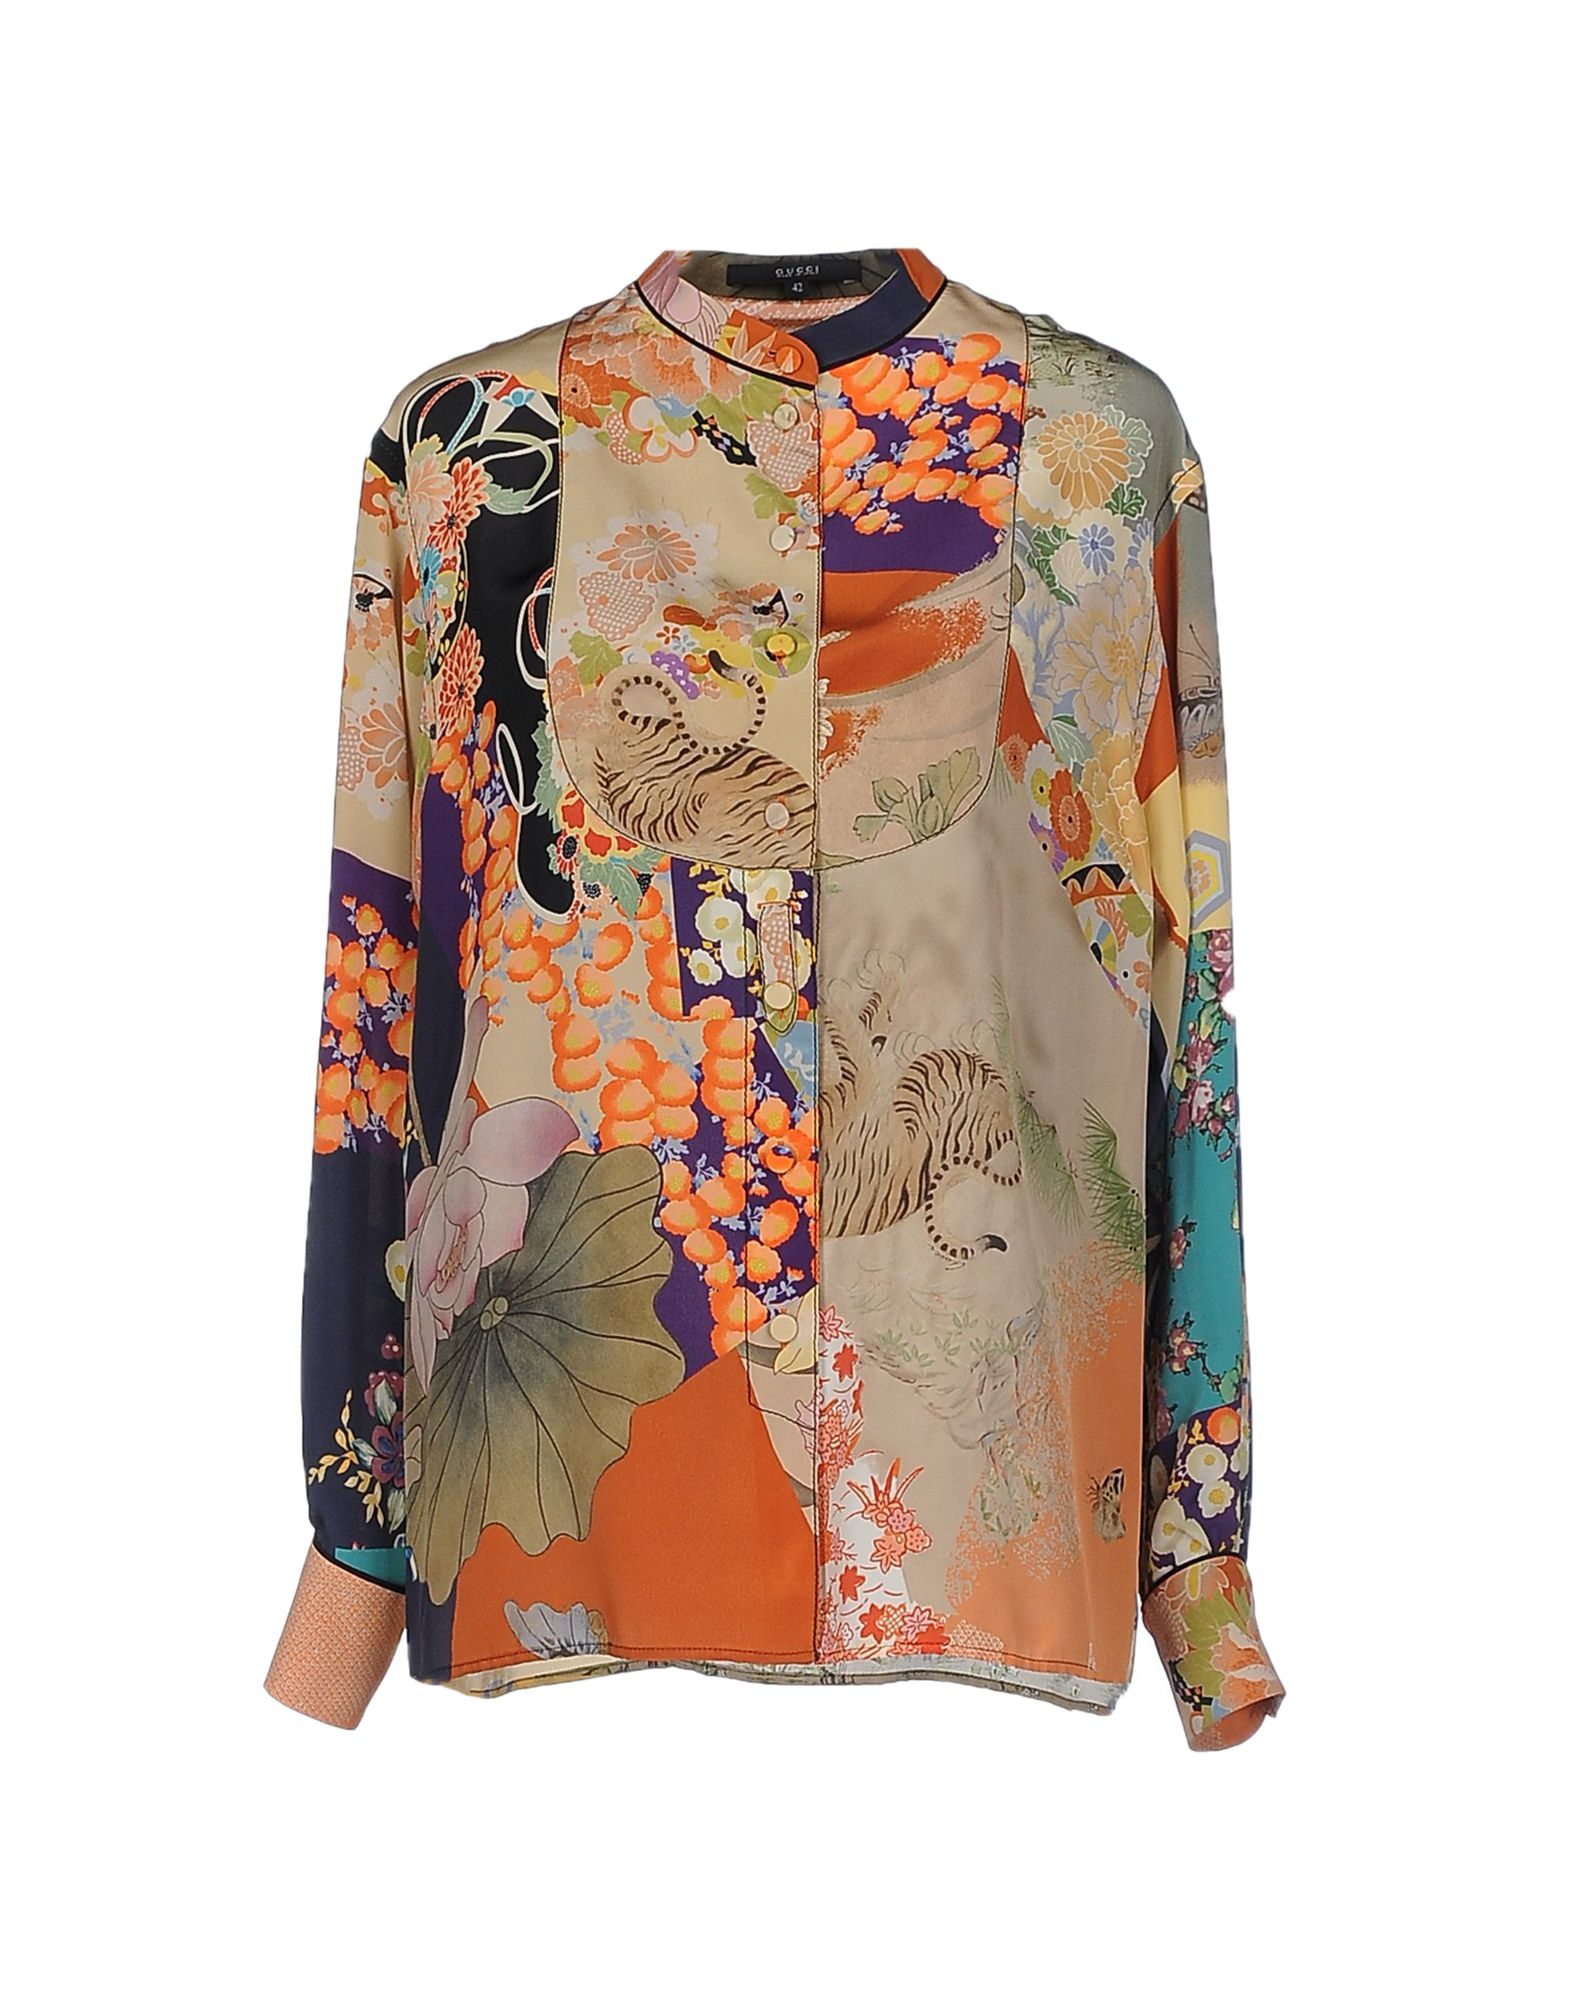 Gucci Japanese-Print Silk Shirt in Orange - Lyst